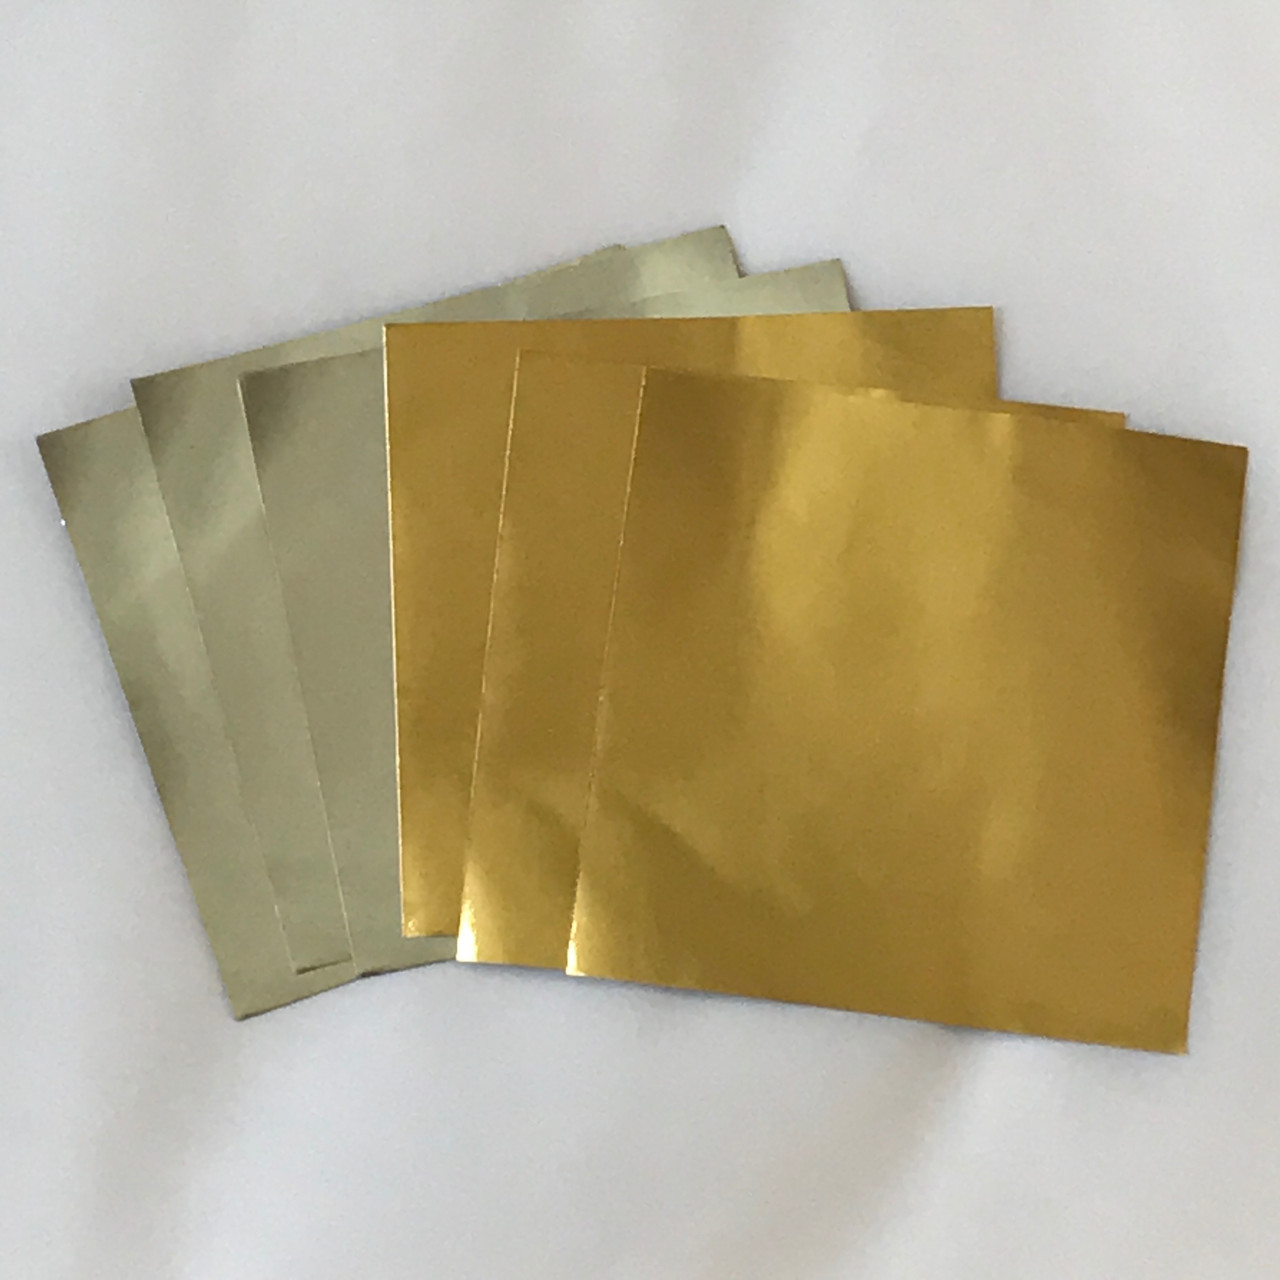 Metallic Foil Paper